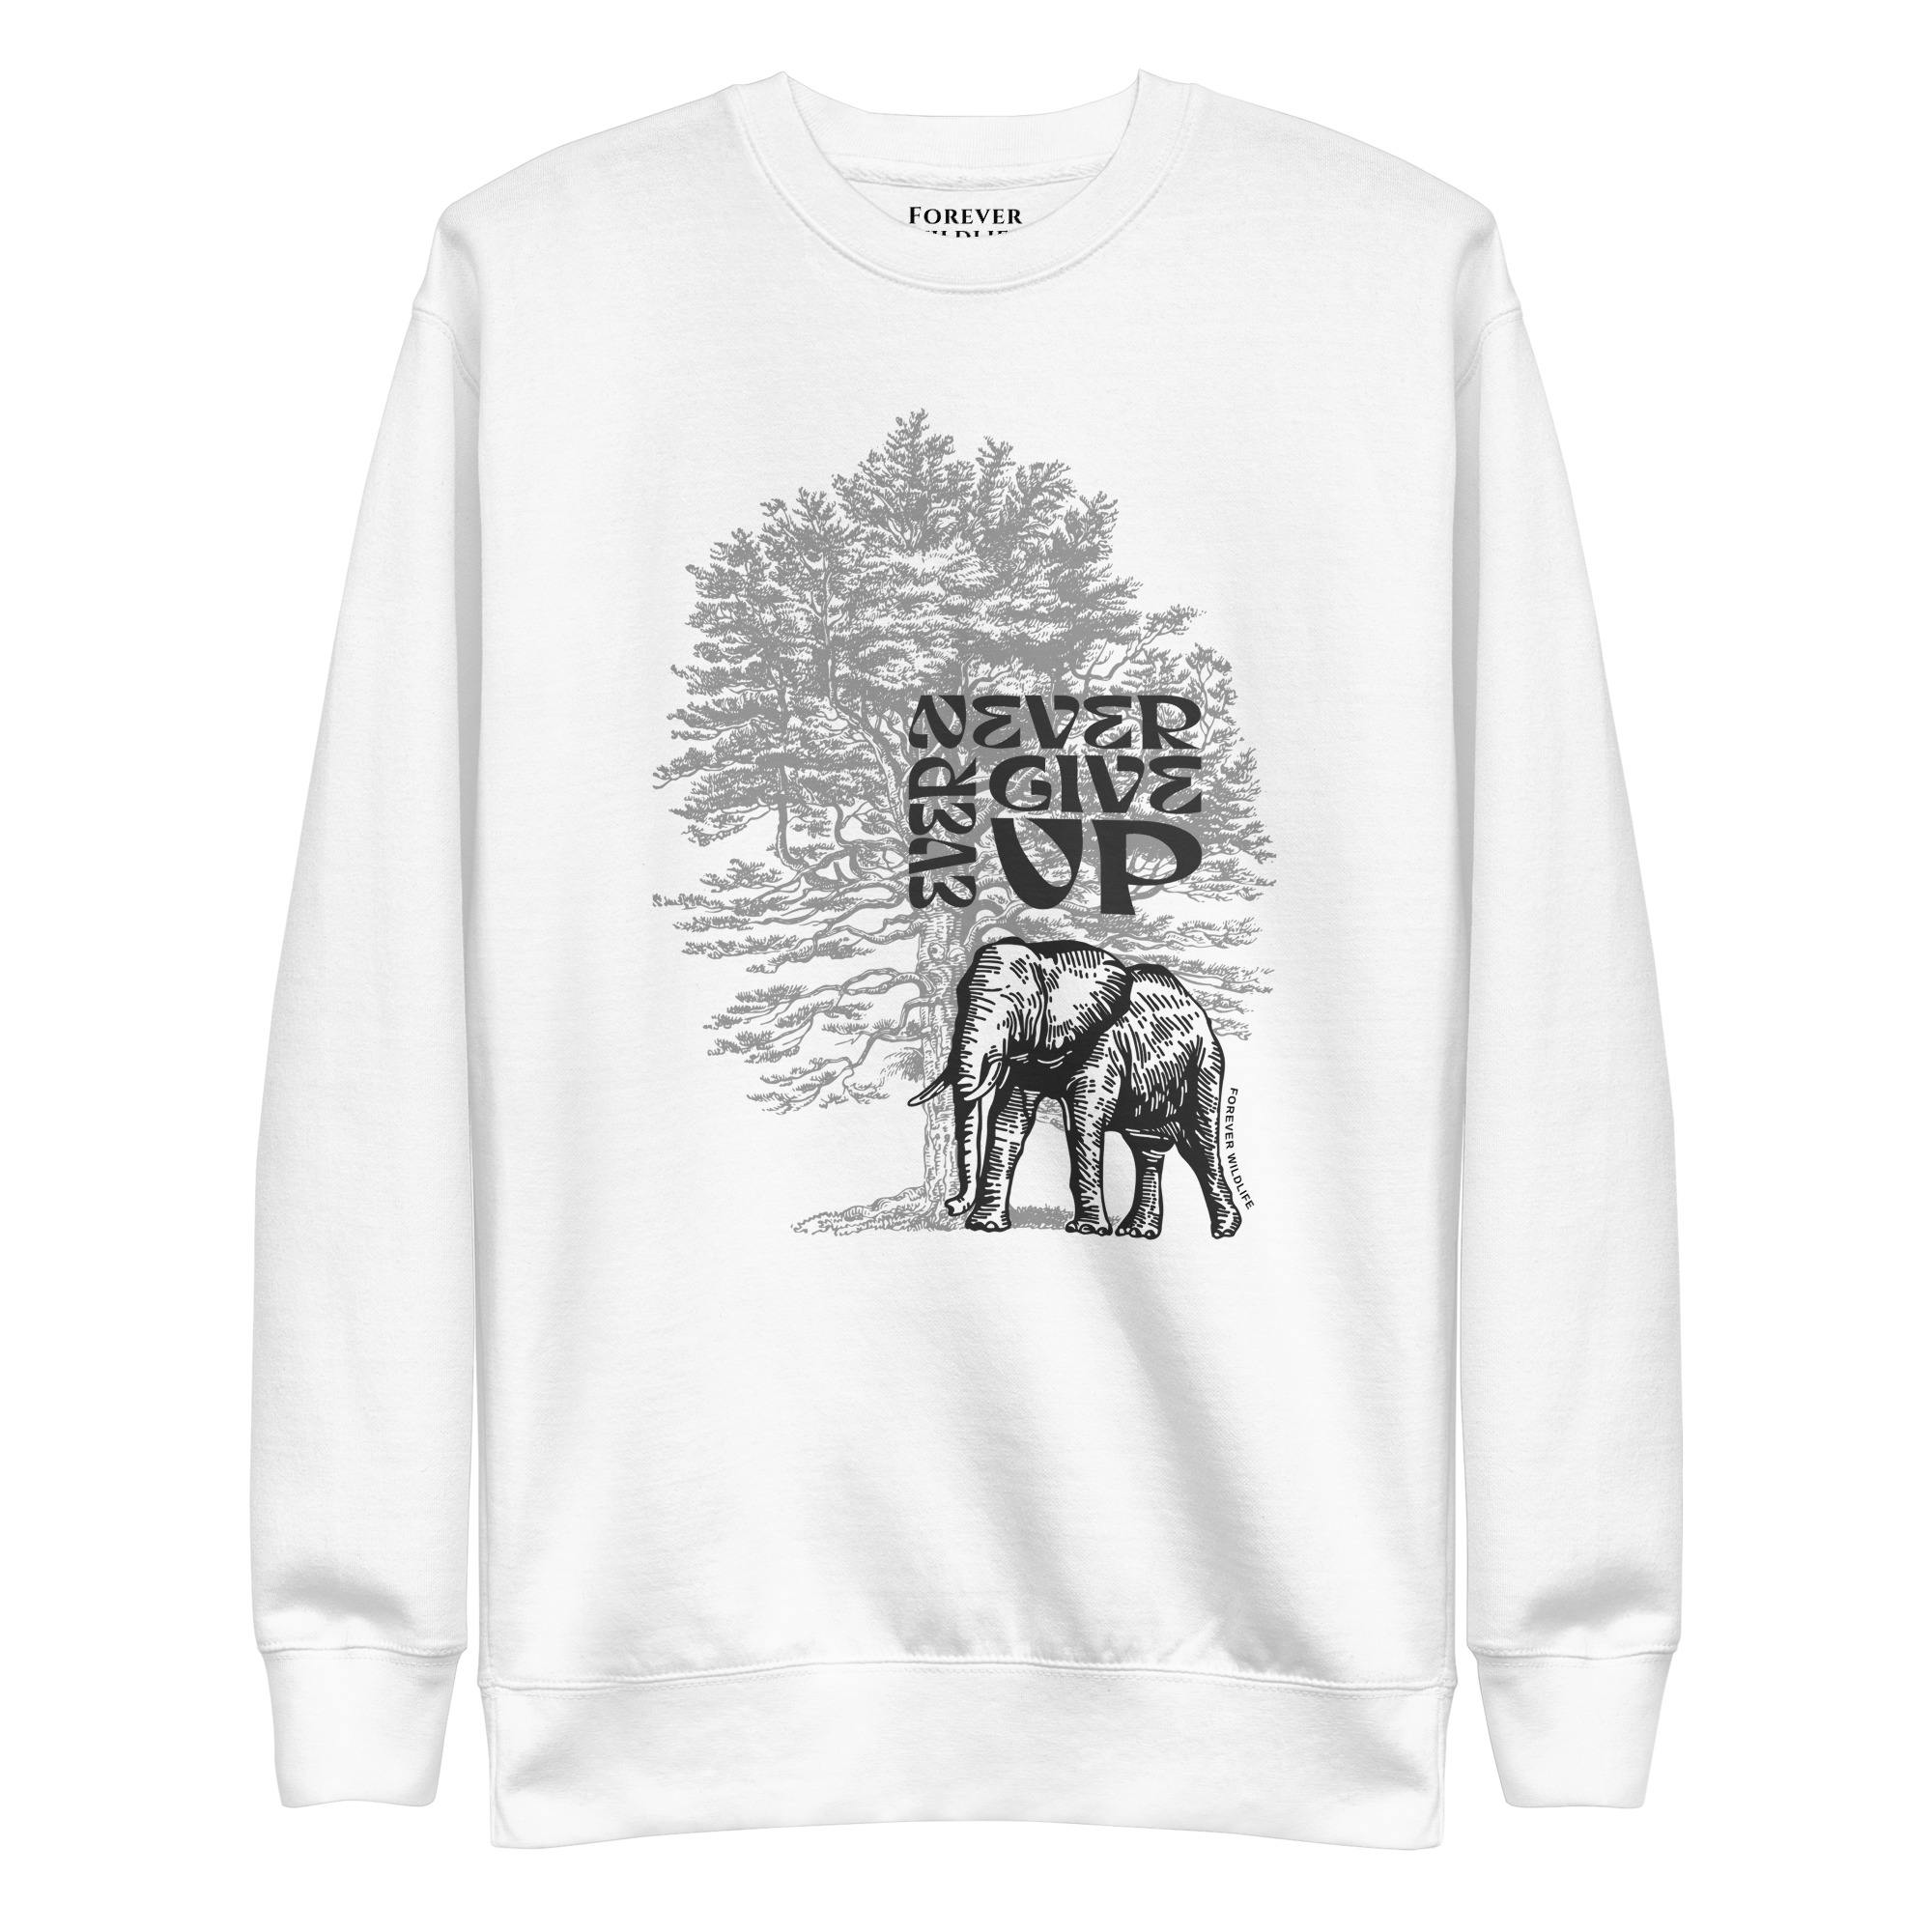 Elephant Sweatshirt in White-Premium Wildlife Animal Inspiration Sweatshirt Design with 'Never Ever Give Up' text, part of Wildlife Sweatshirts & Clothing from Forever Wildlife.